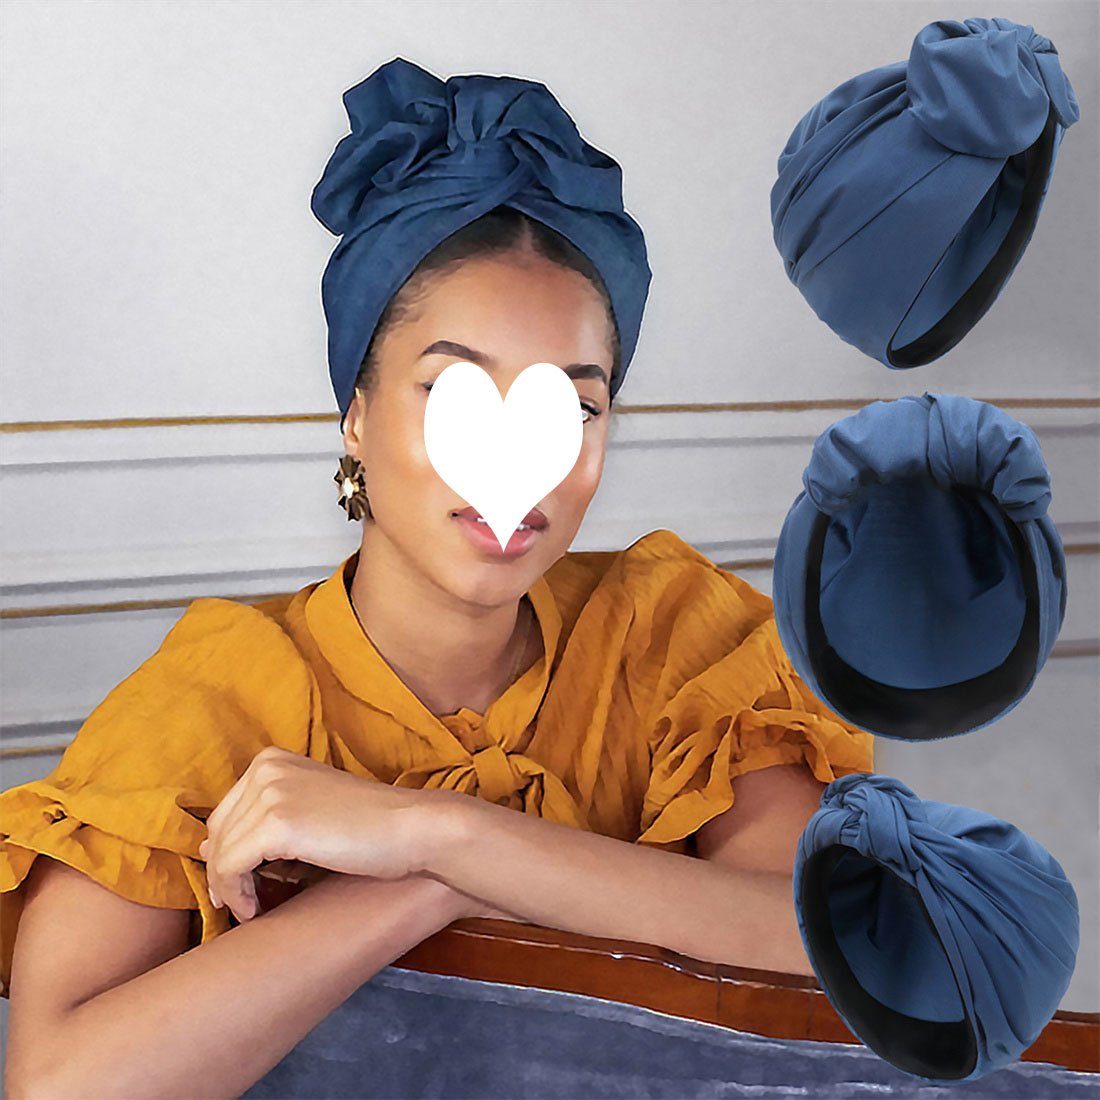 DÖRÖY Schlapphut Frauen Crossover Turban Hut, Mode Turban, Vintage Overhead Cap blau